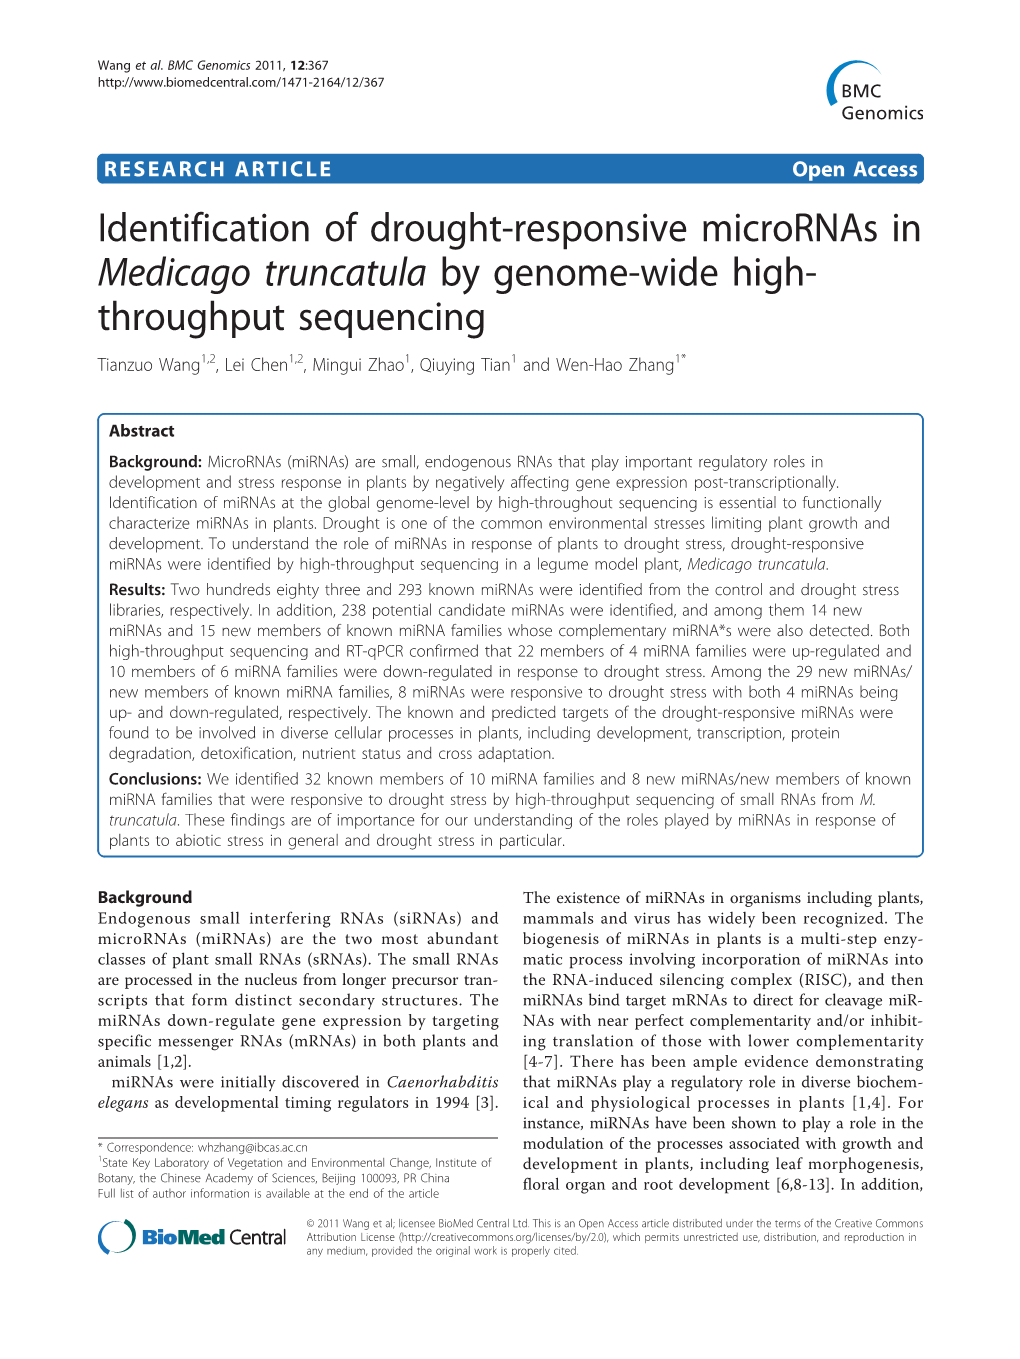 Identification of Drought-Responsive Micrornas in Medicago Truncatula